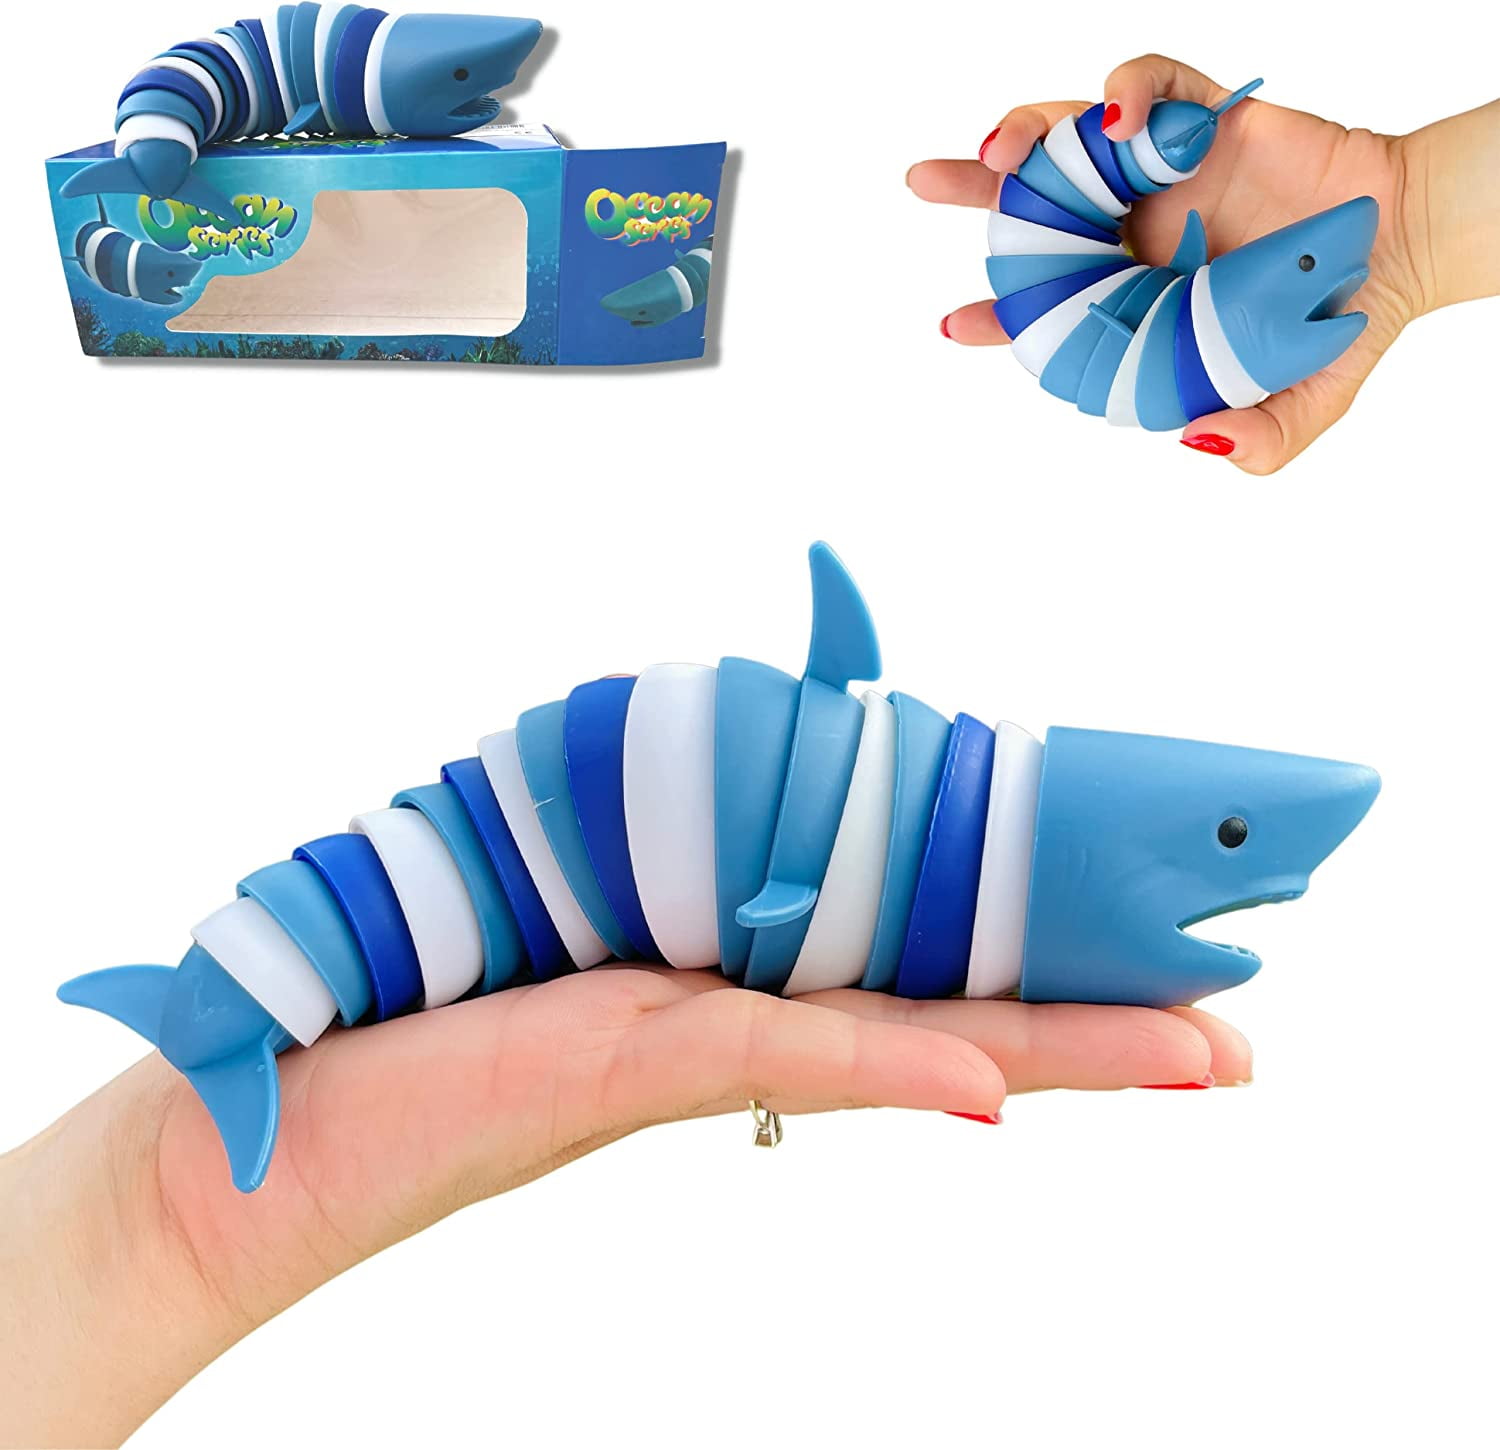 Shark Fidget Toy,Sensory Shark 3D,Flexible Decompression Shark for Relaxing,Friendly Articulated Shark Fidget Toy,Hand Toy for Adults,7.5 Inch - Walmart.com